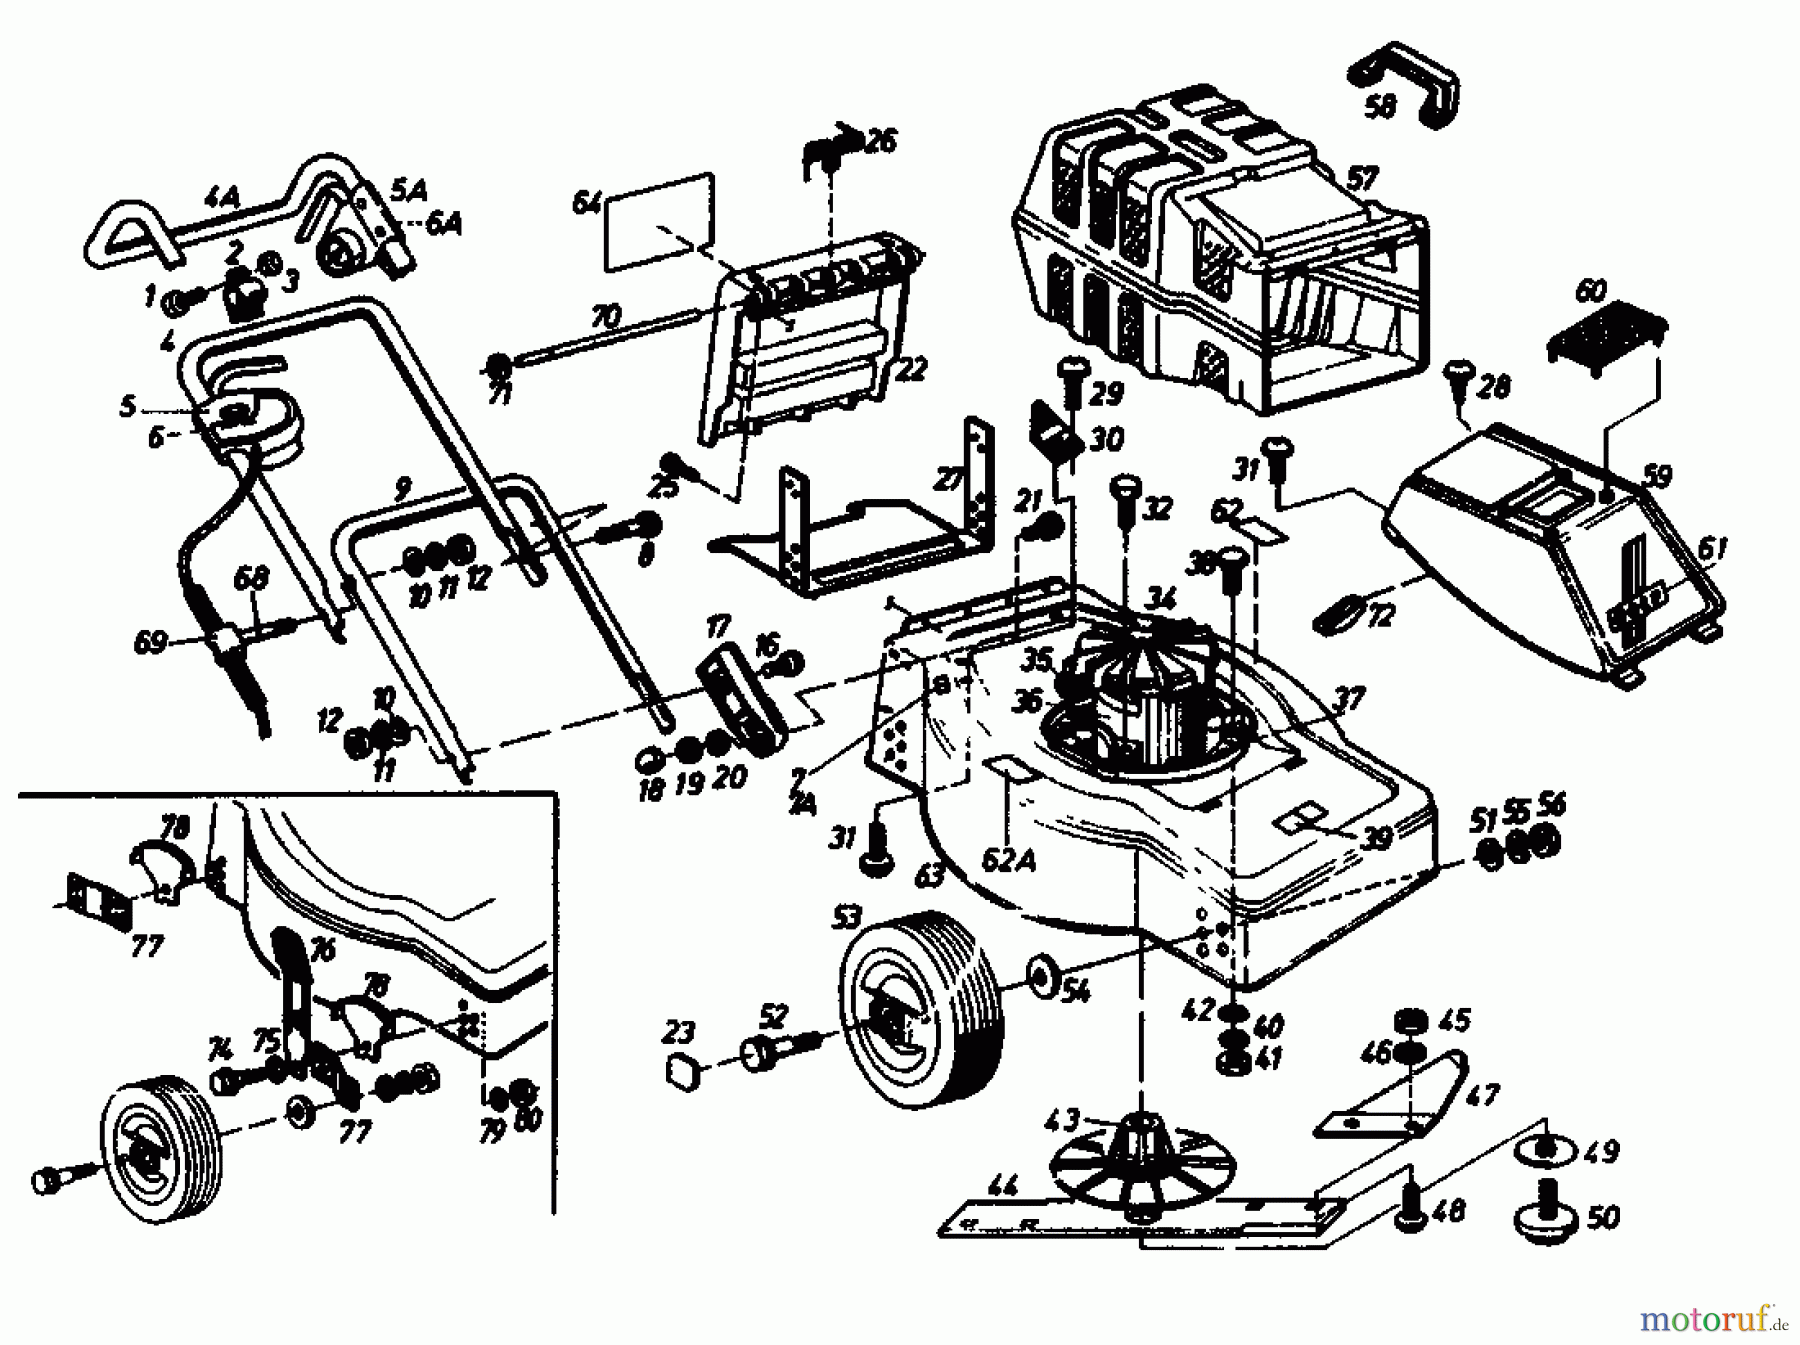  Golf Electric mower HE 02881.04  (1989) Basic machine